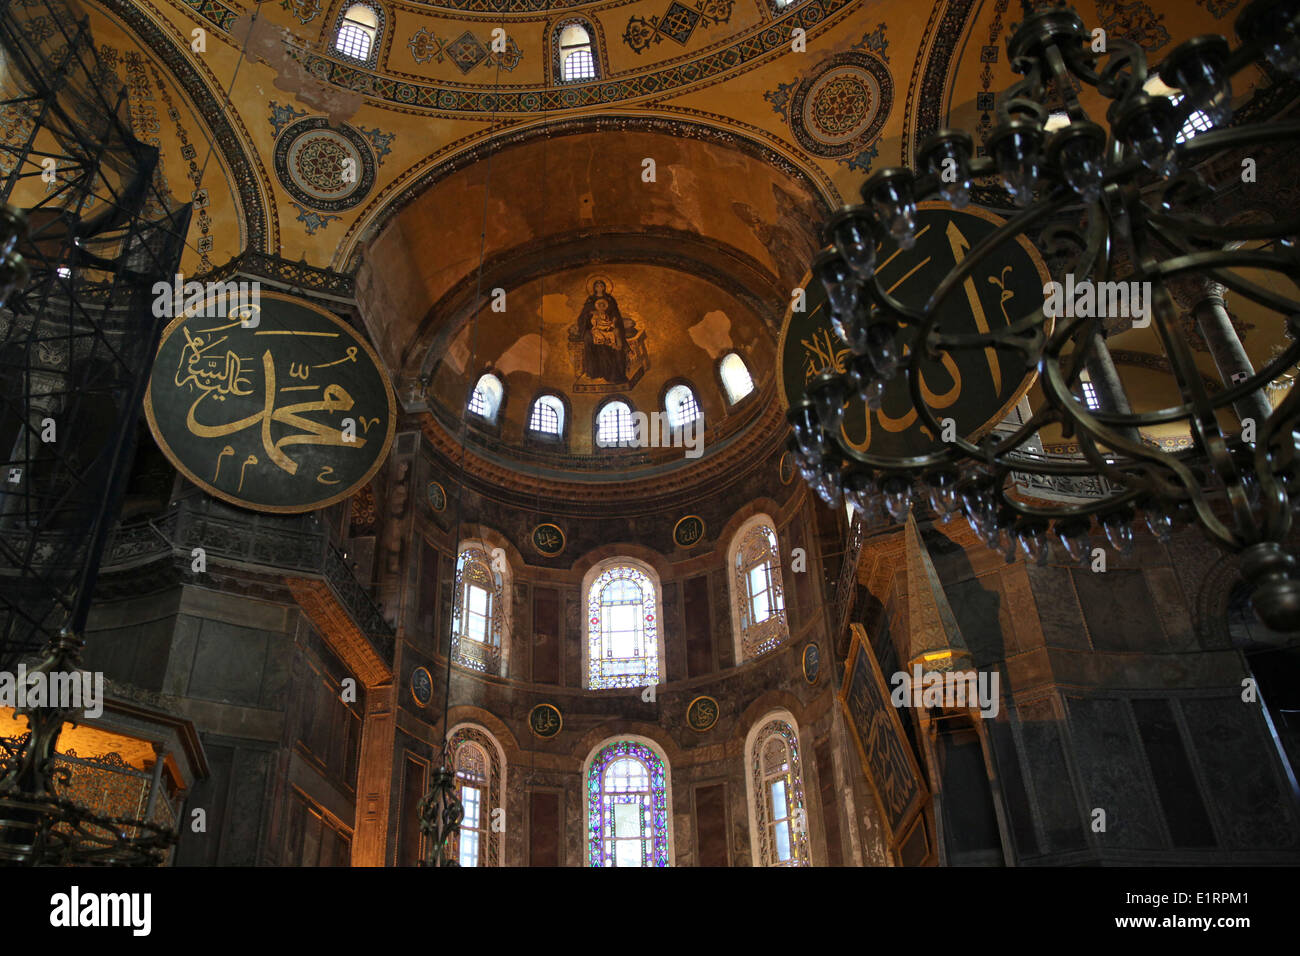 Interior of the Hagia Sophia, also called Aya Sophia, in Istanbul, Turkey Stock Photo